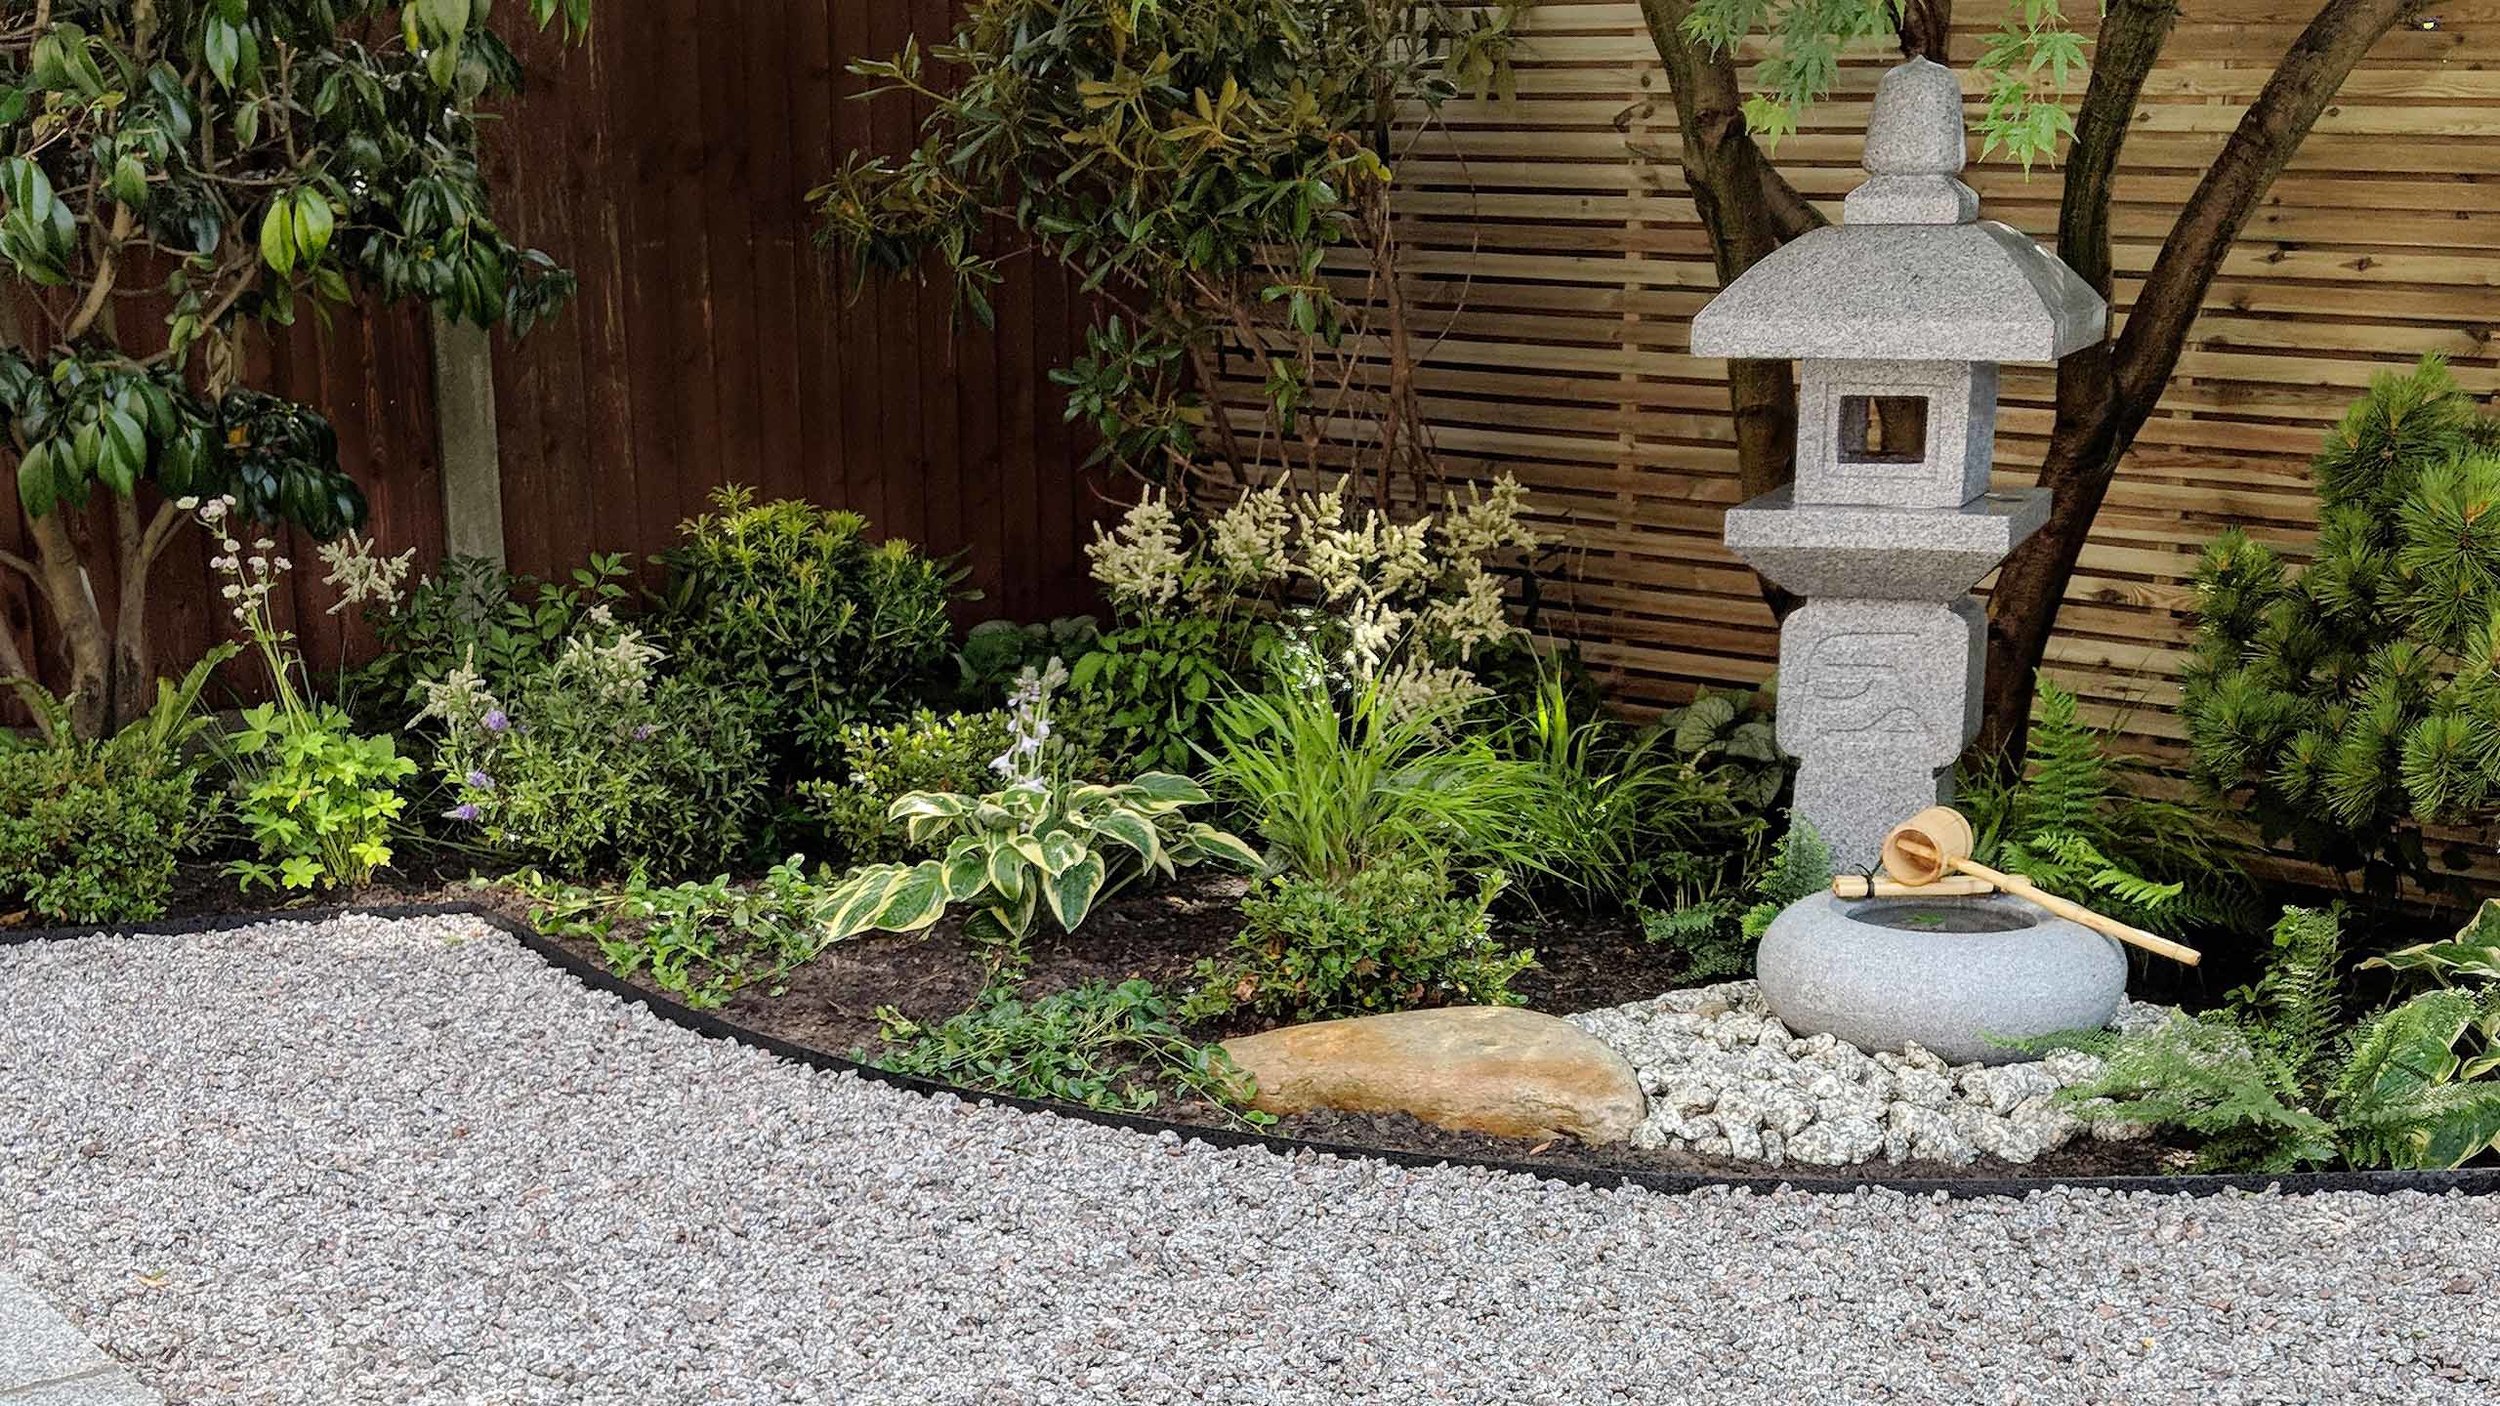 Cheshire Garden Design: Japanese garden with Oribe (Lantern) and Tetsu Bachi Basin